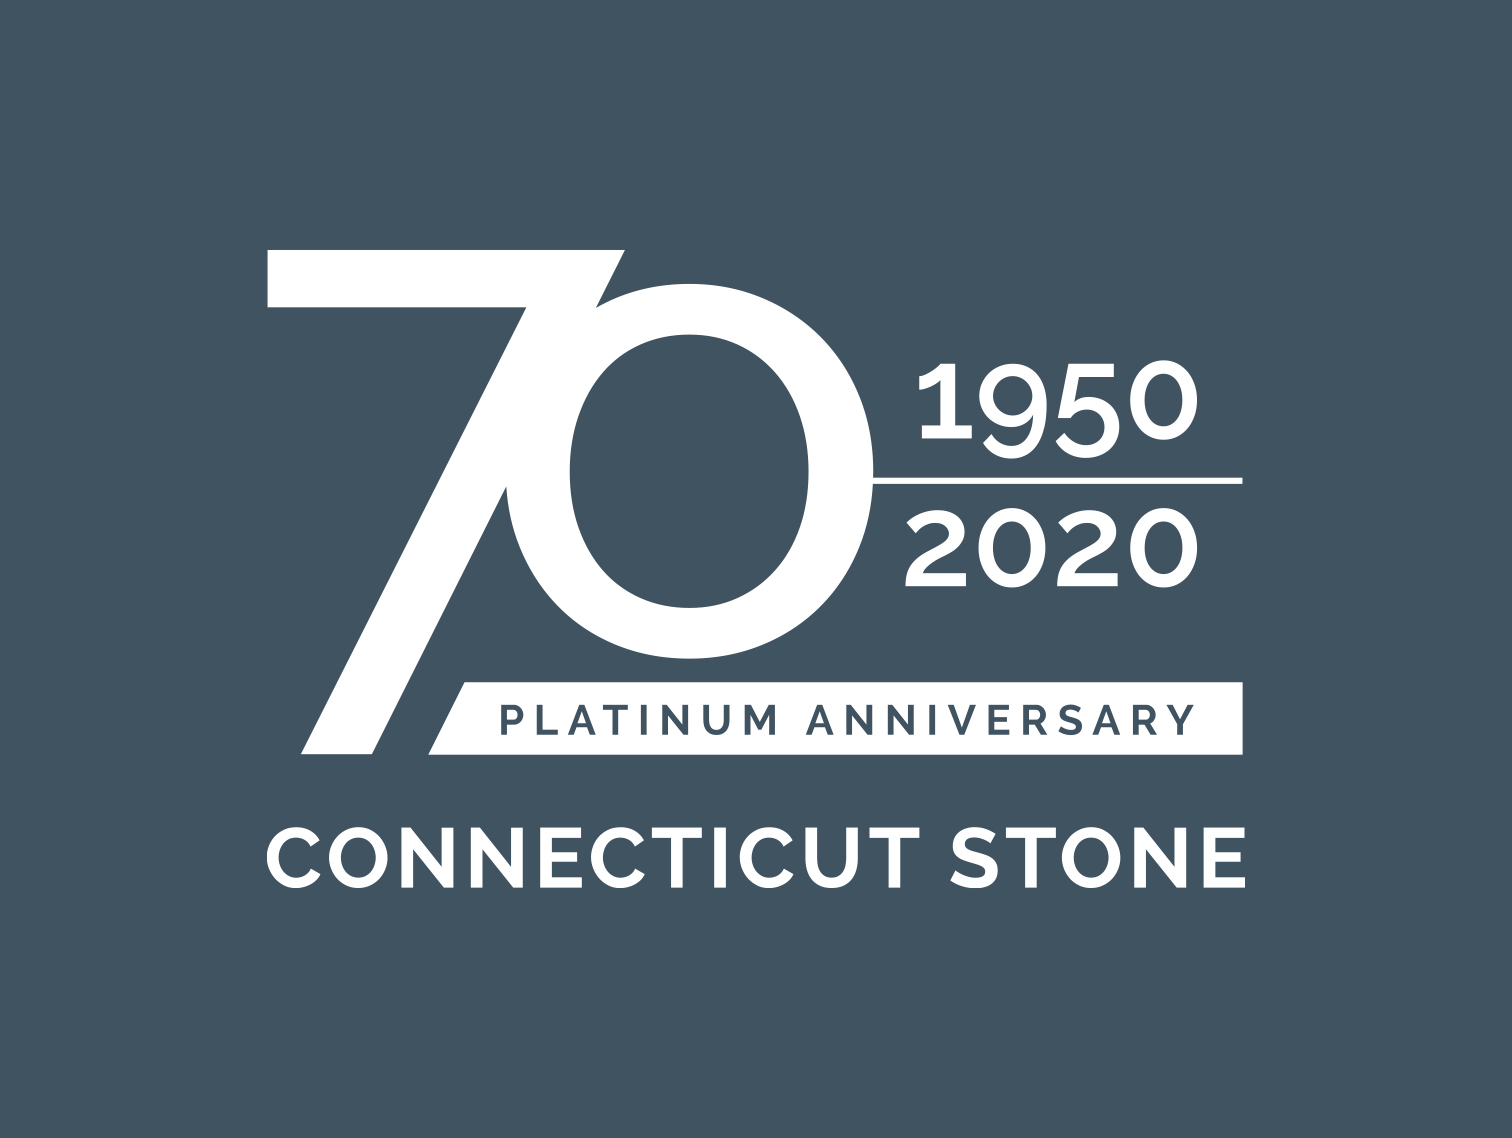 Connecticut Stone 70th Anniversary